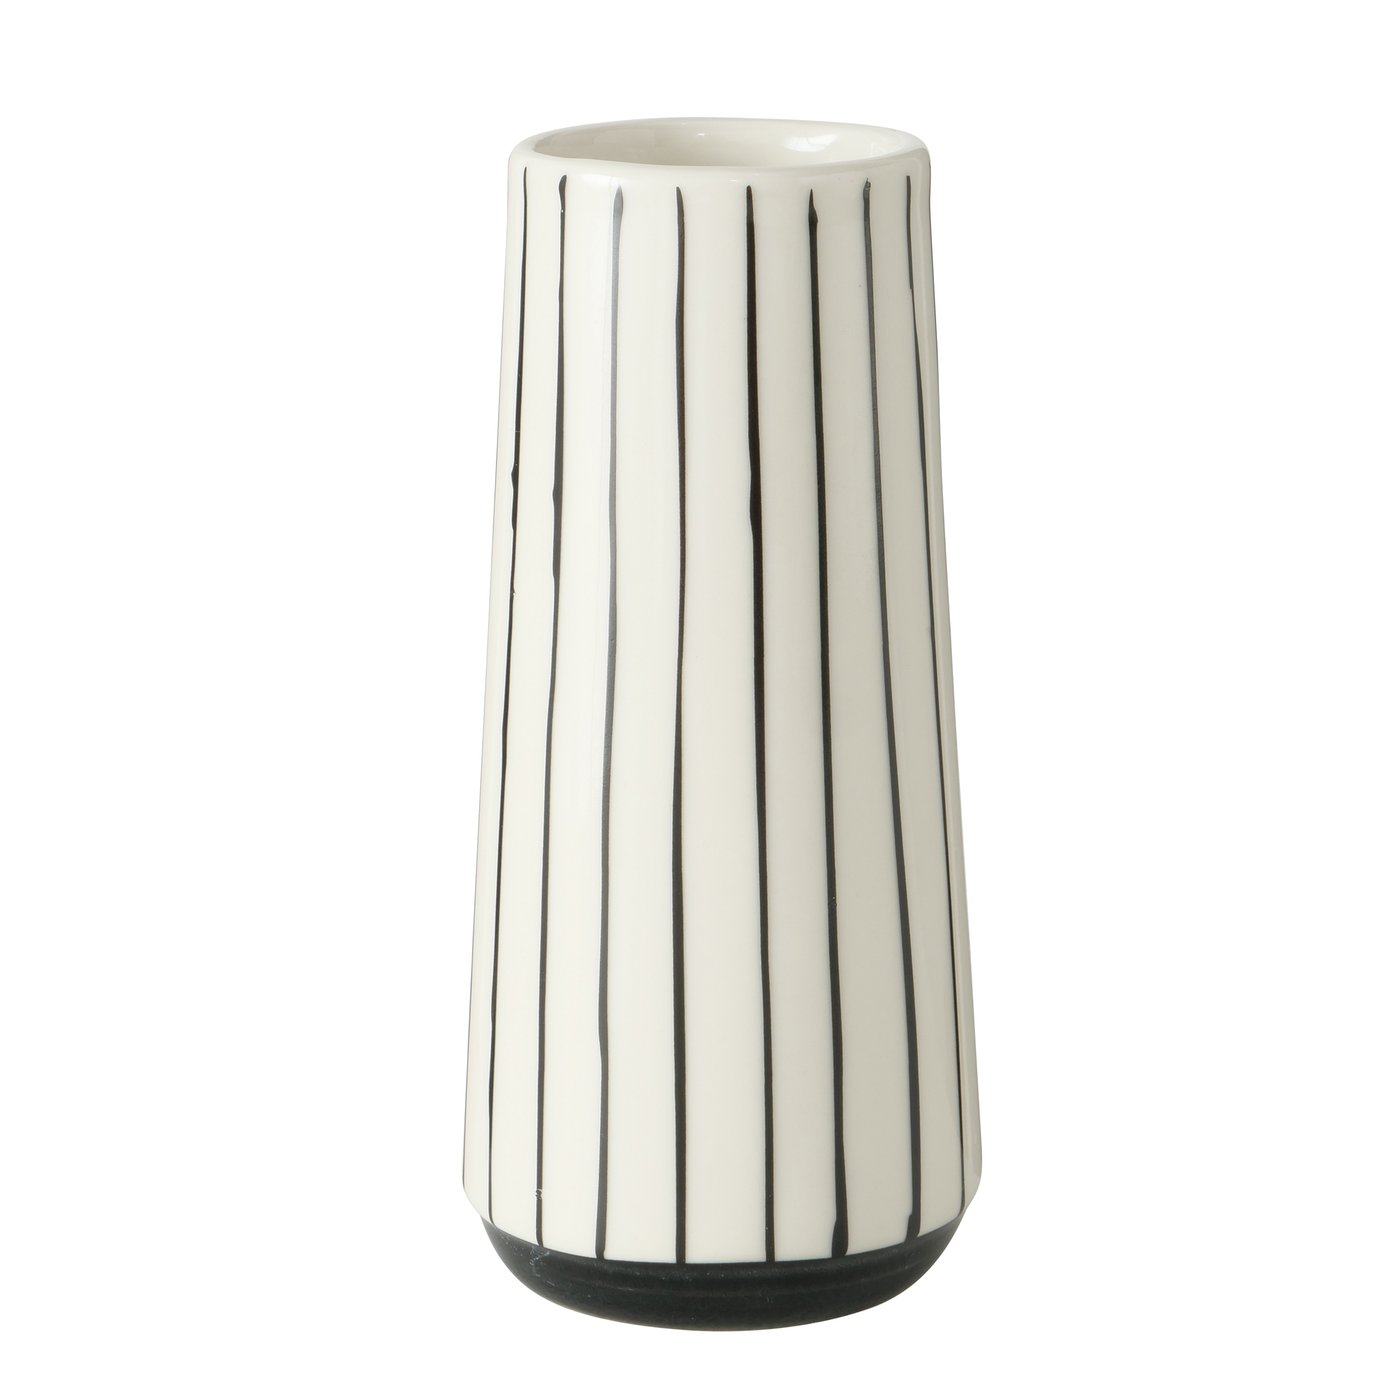 &Quirky Monochrome Gebby Vase